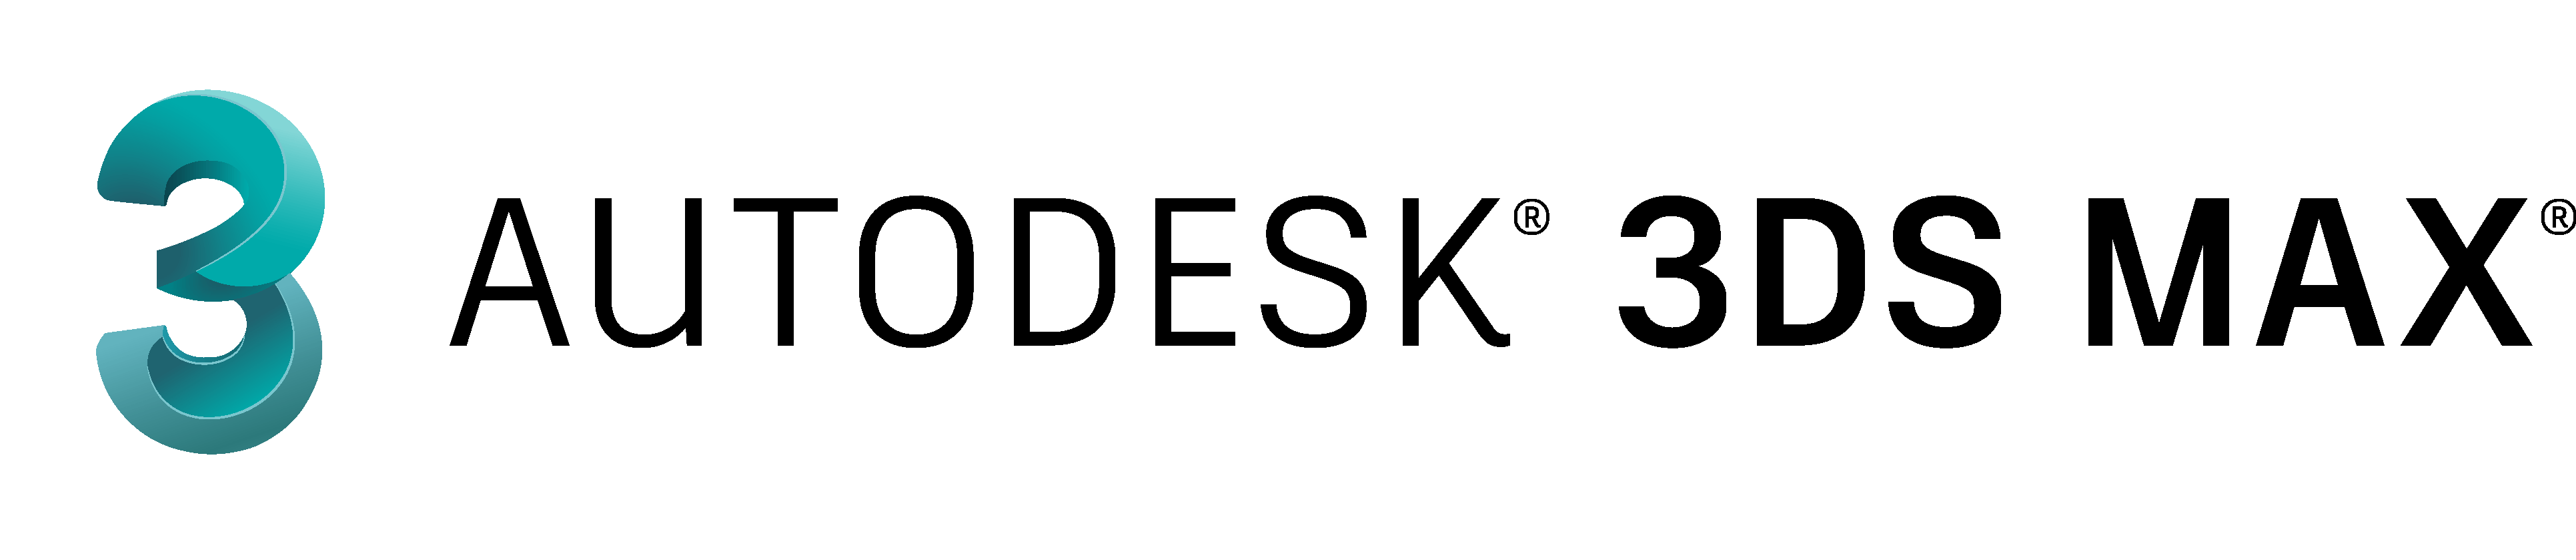 Интернет операция без 3ds. Autodesk 3d Max logo. 3ds Max логотип. Autodesk 3ds Max лого. Значок 3ds Max 2021.